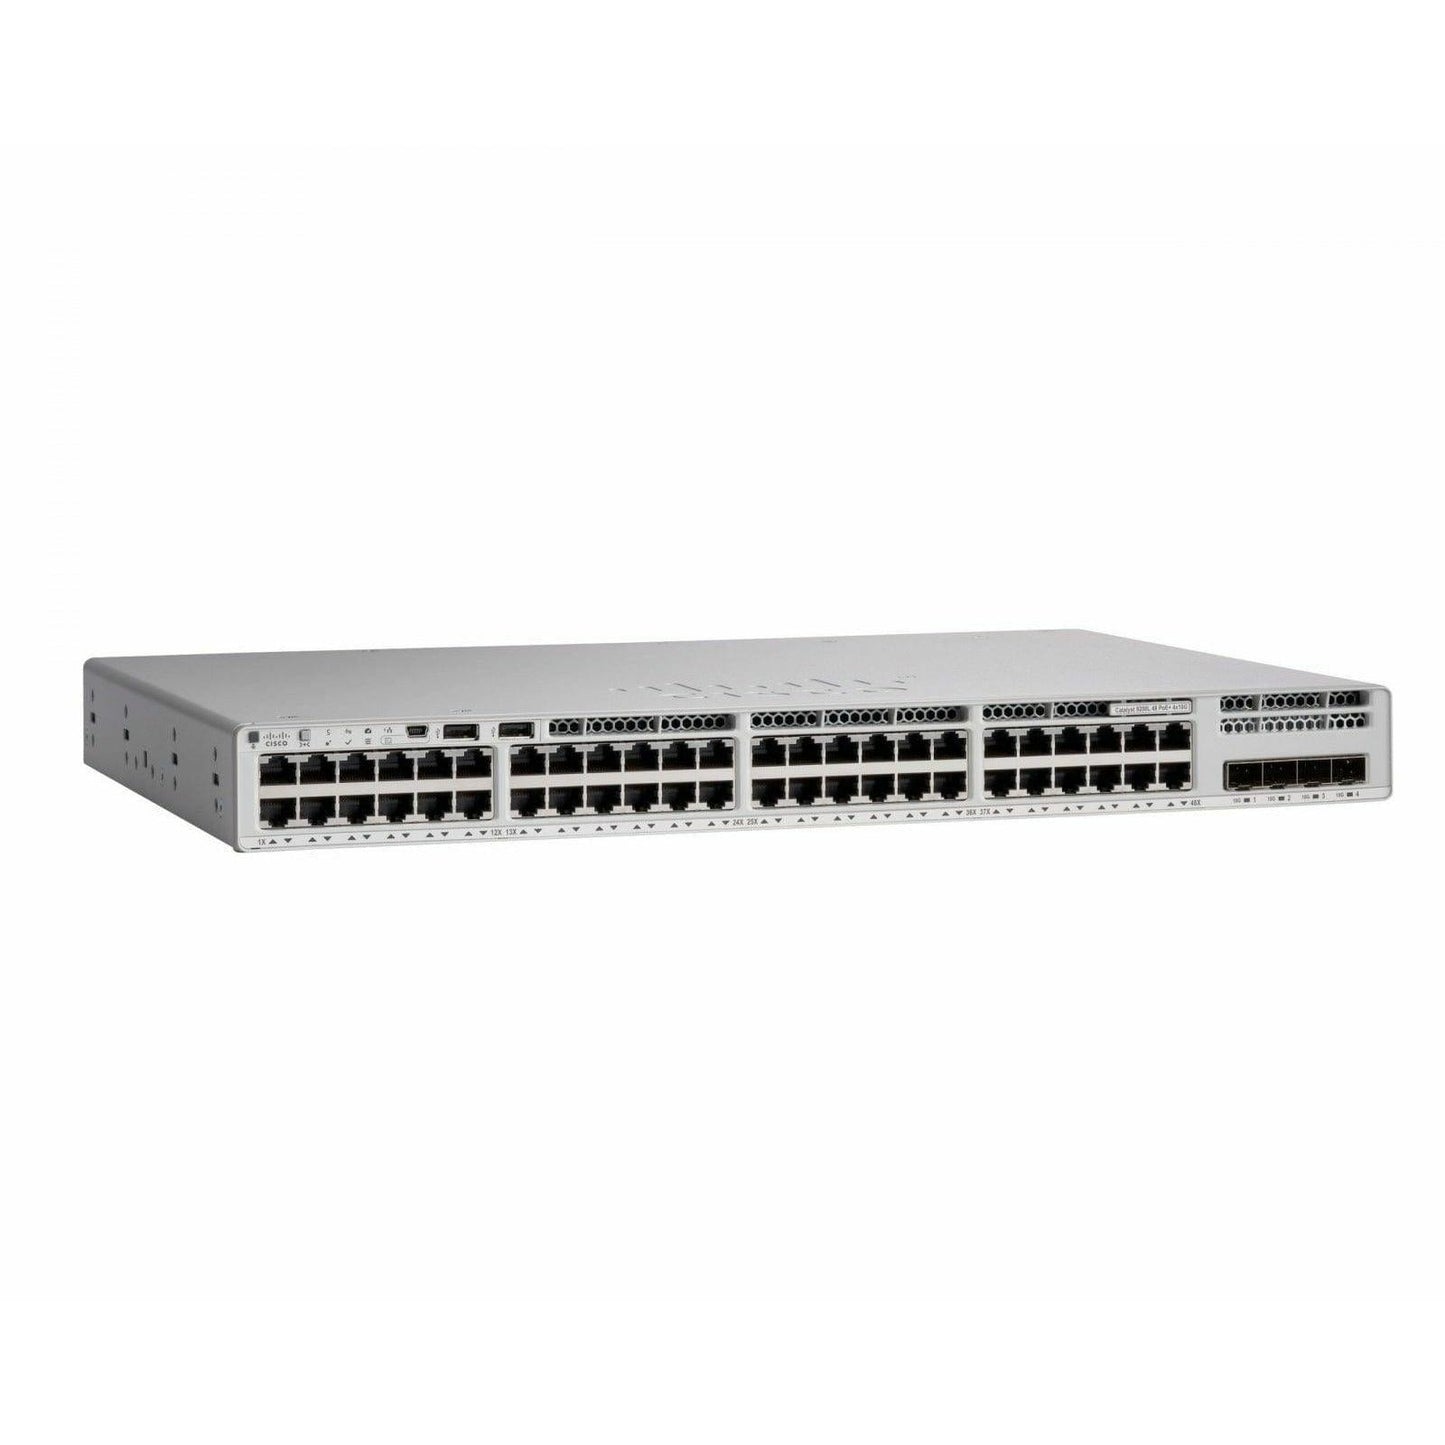 Cisco 9200 48 Port Gigabit PoE Switch - C9200L-48P-4G-E - Refurbished - C9200L-48P-4G-E-R - Reef Telecom